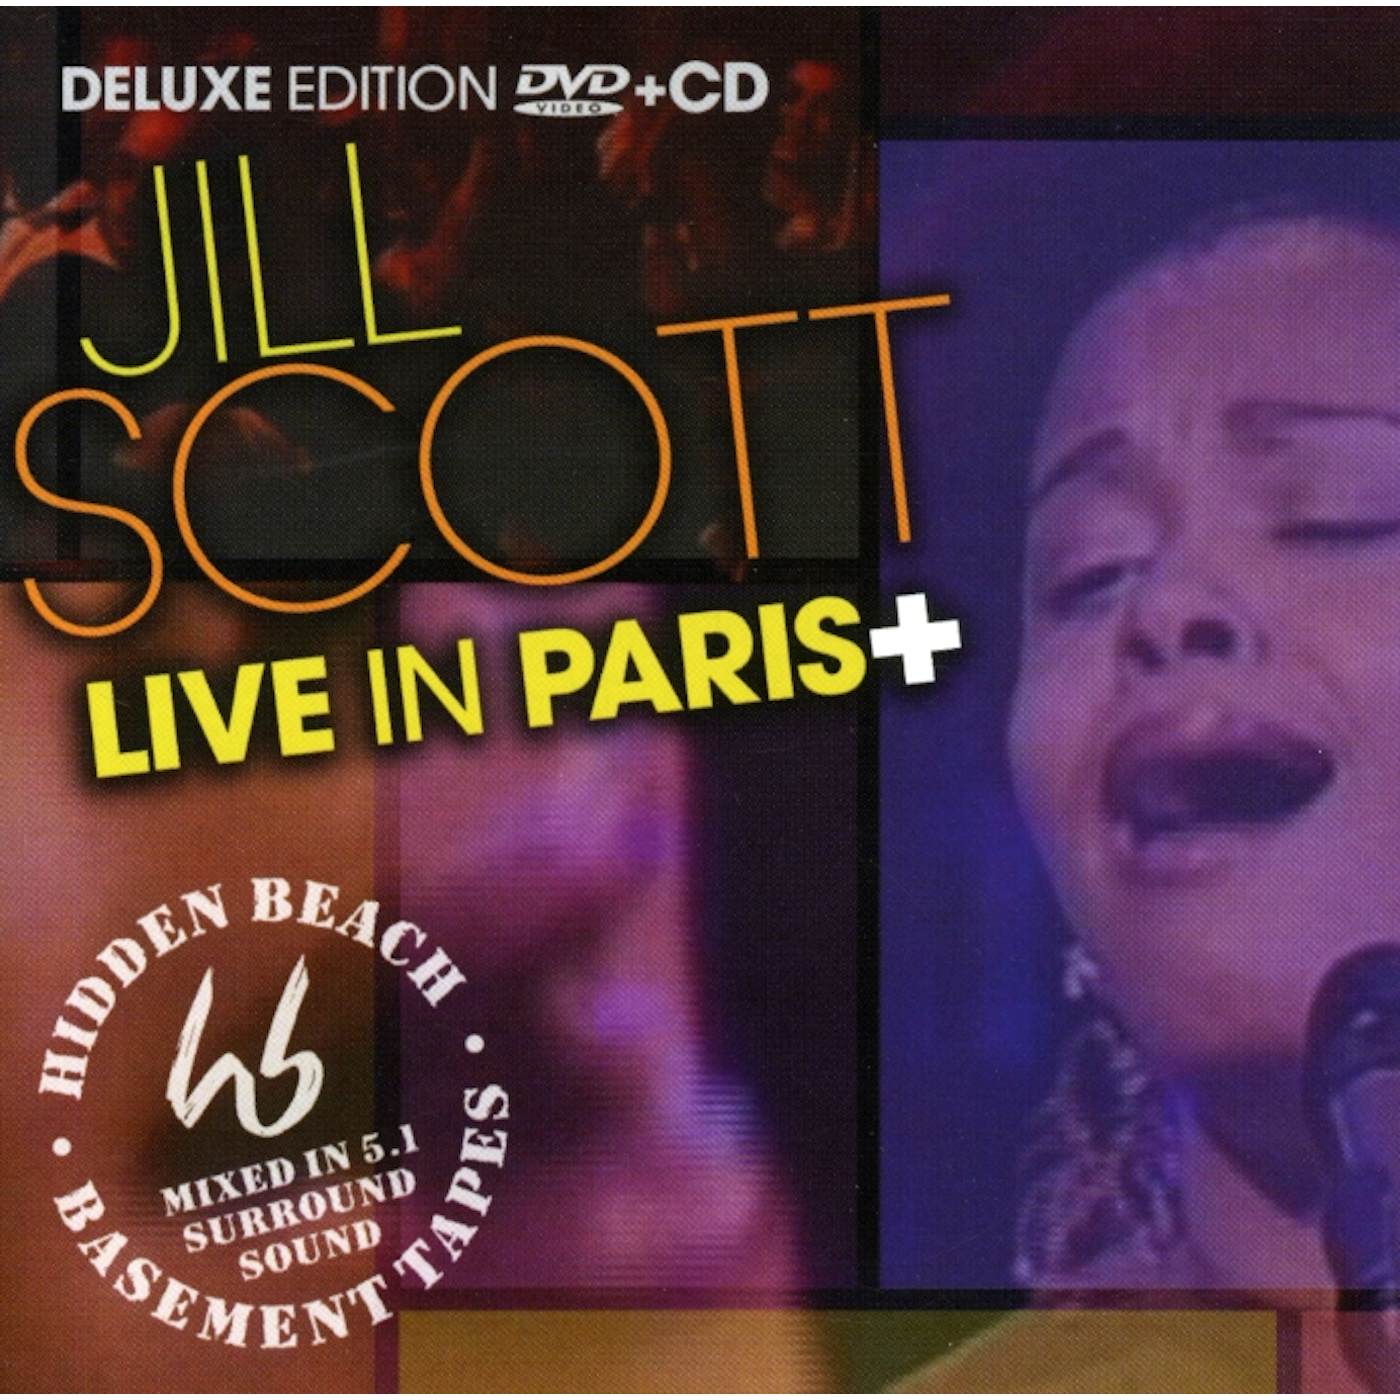 Jill Scott LIVE IN PARIS + CD